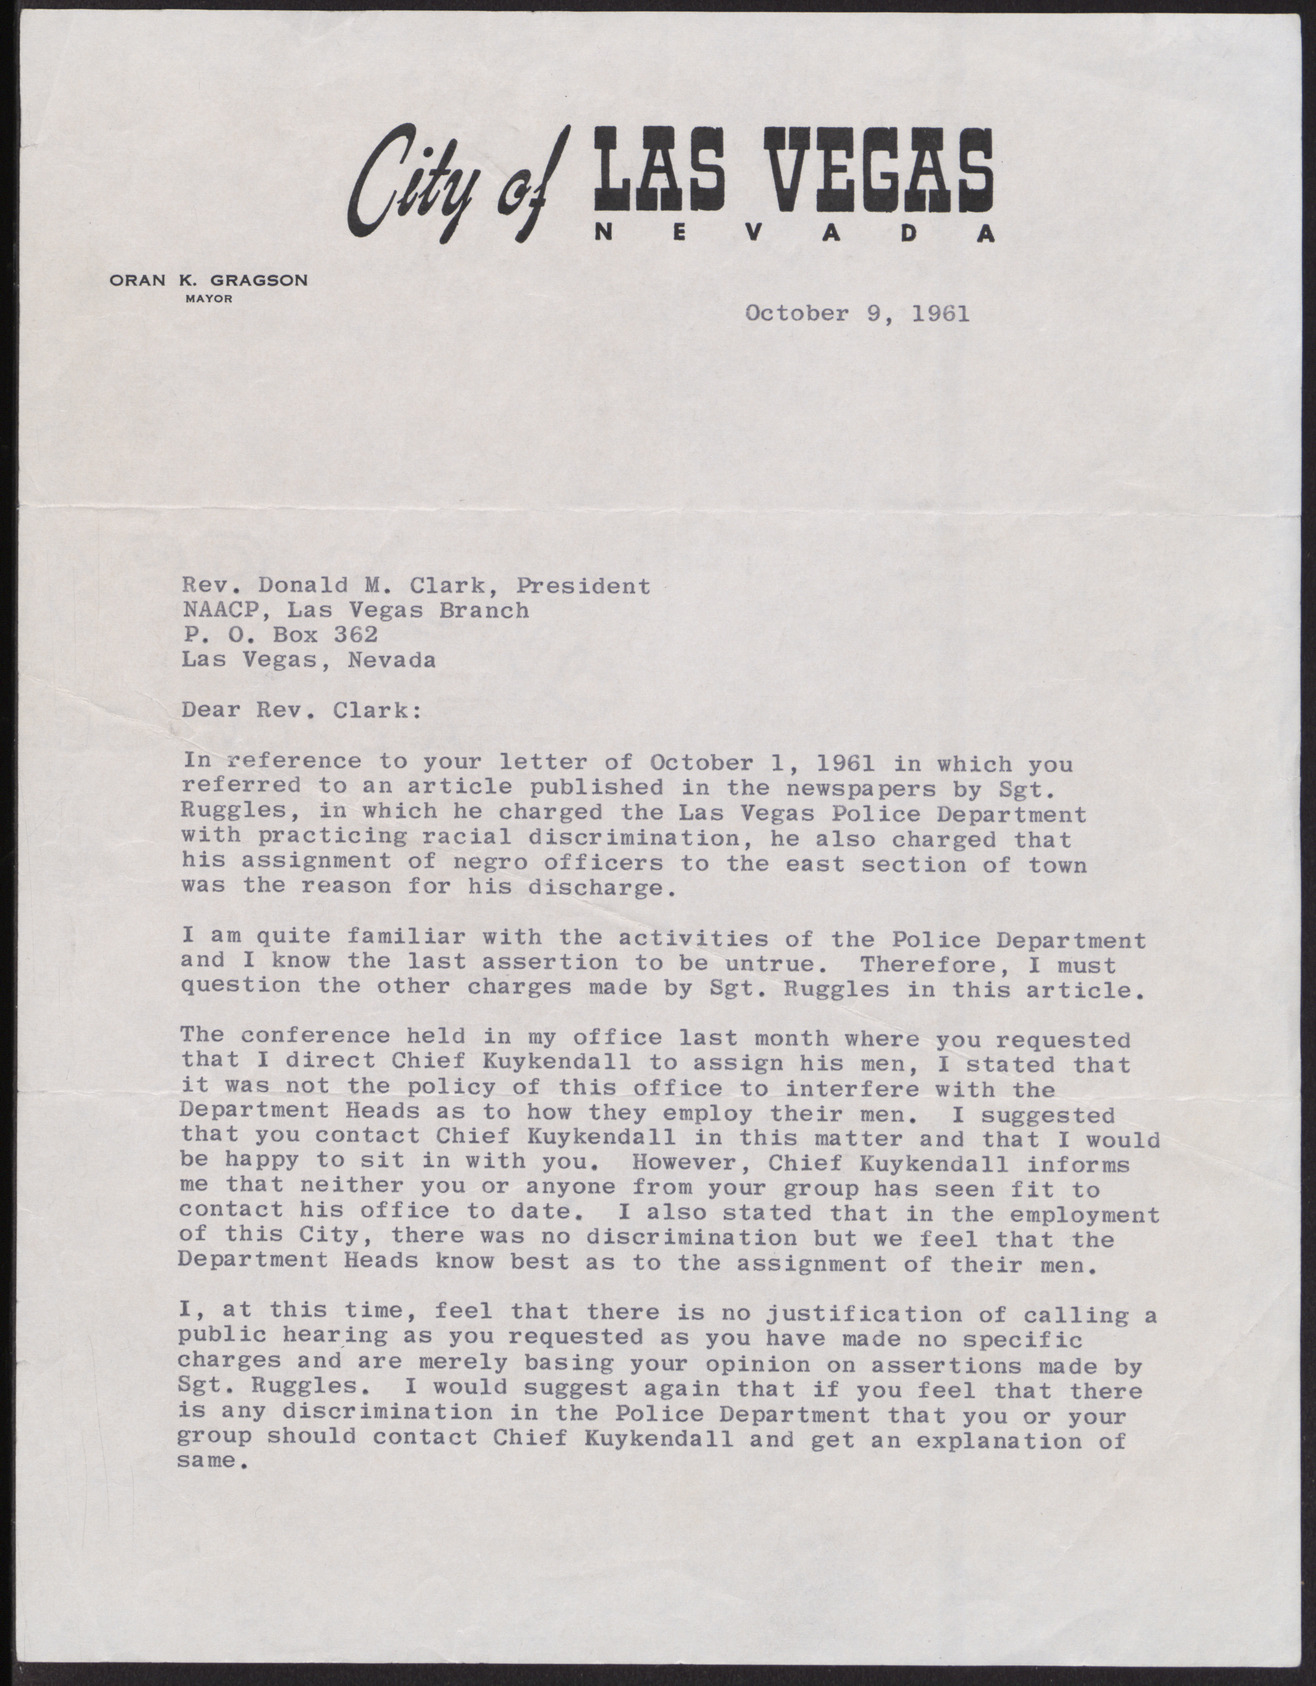 Letter to Rev. Donald M. Clark from Oran K. Gragson, October 9, 1961